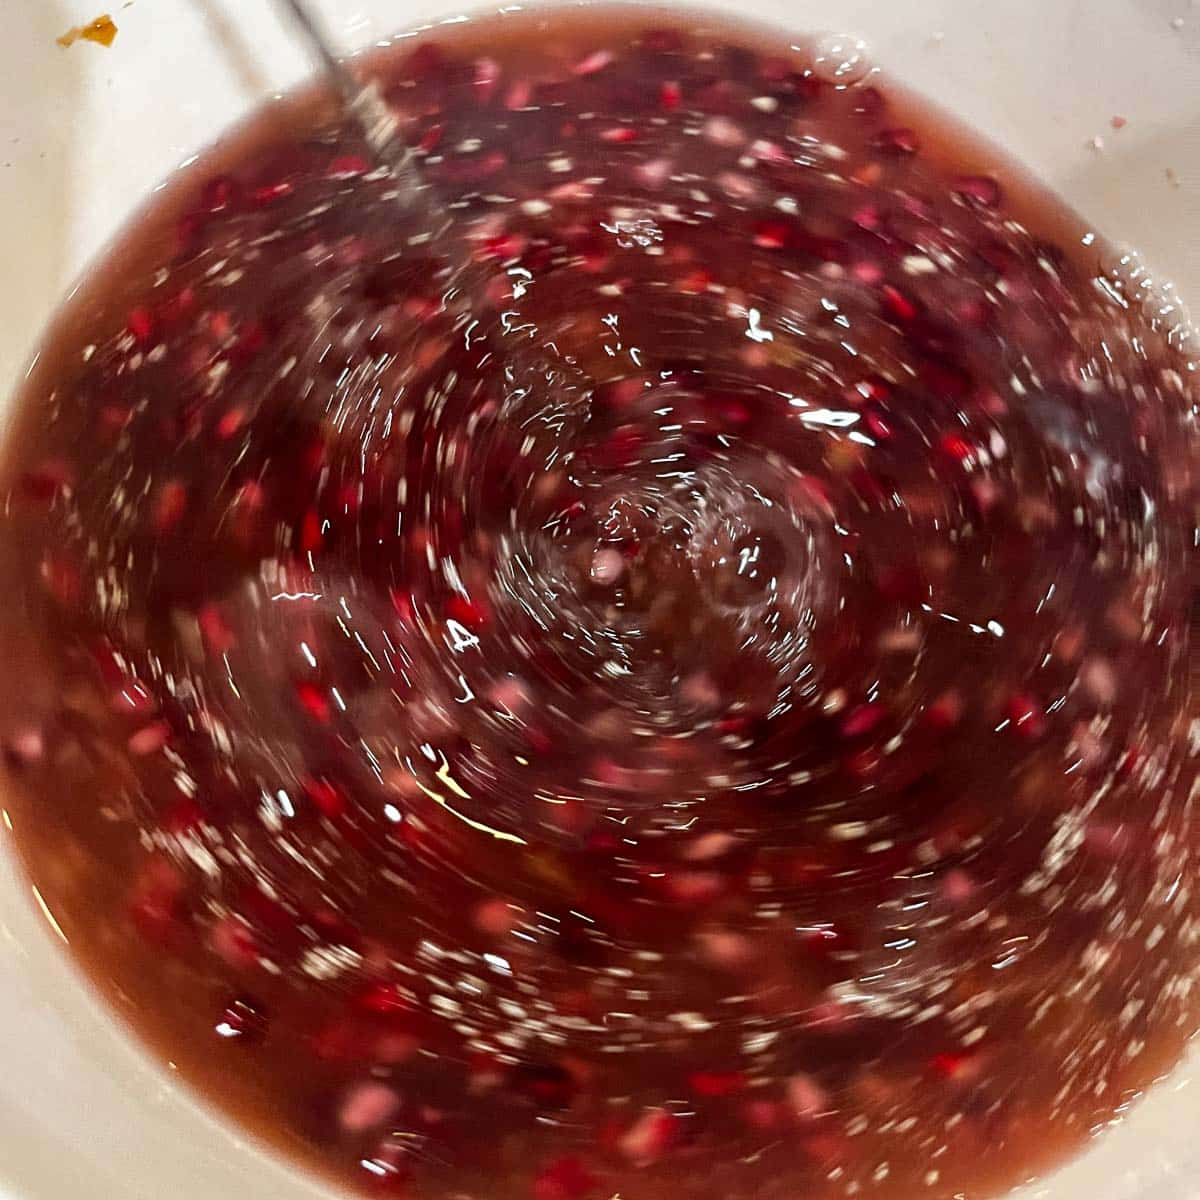 stirring adding chemicals to pomegranate wine must